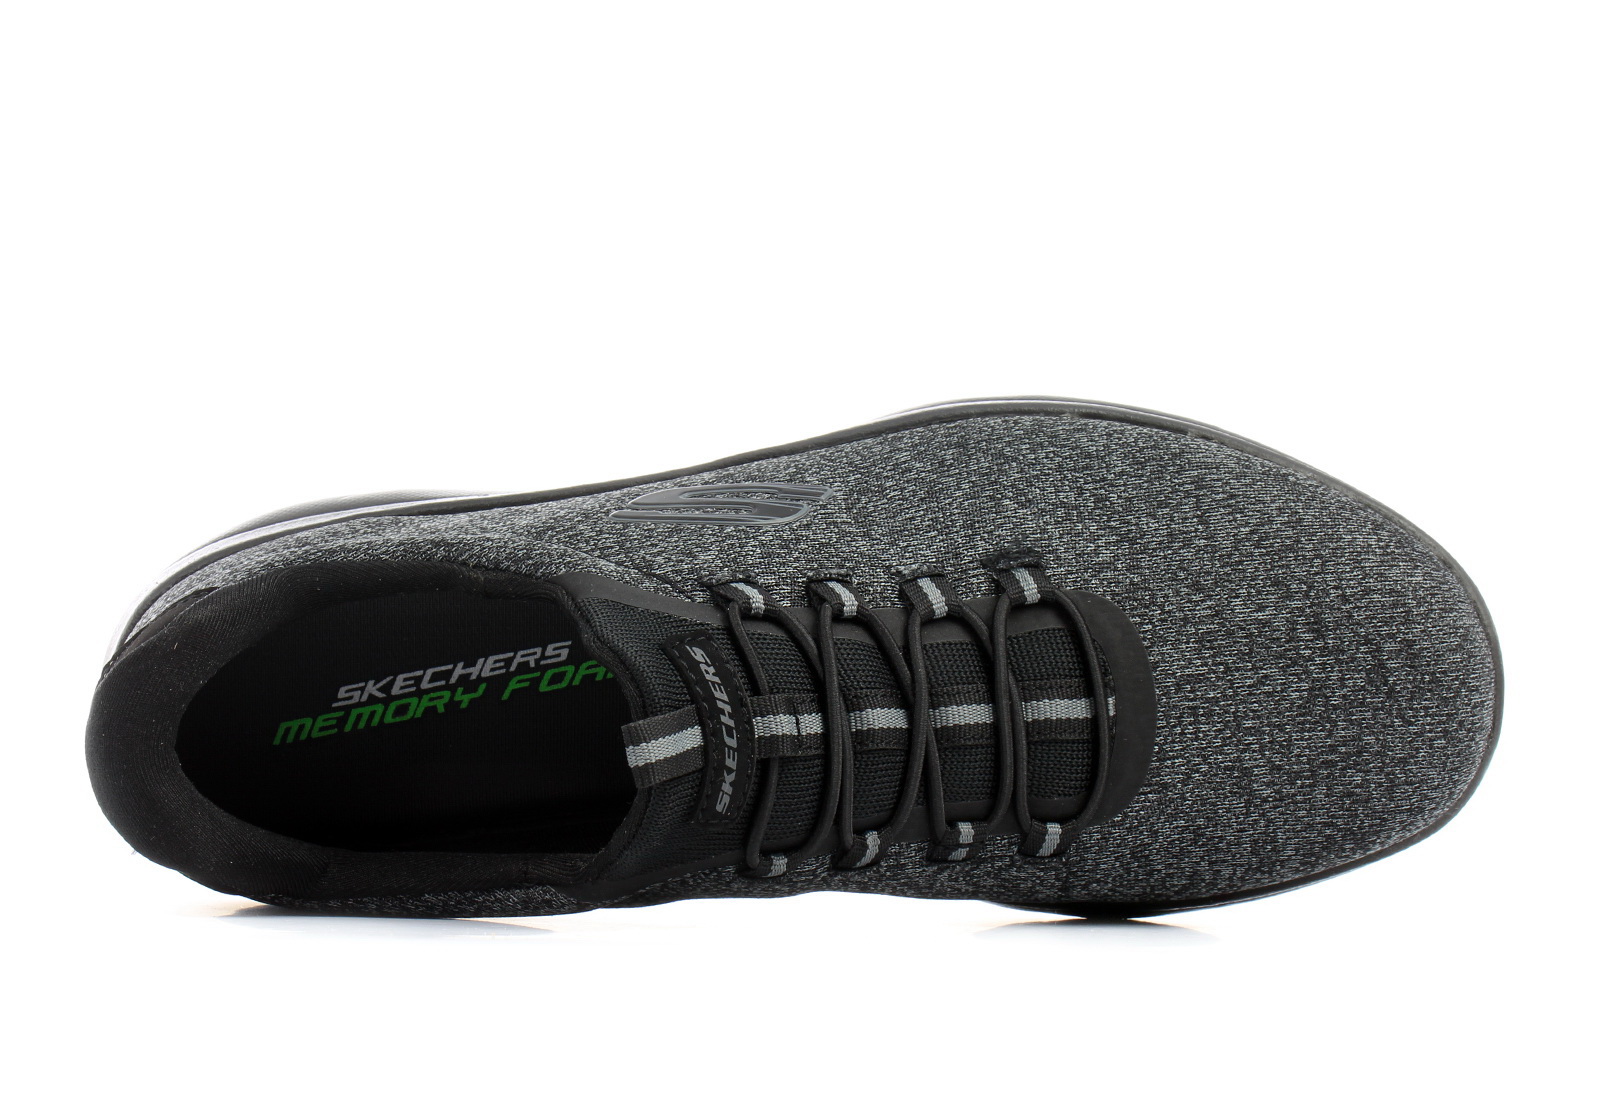 Skechers Sneakers - Summits - Forton - 52813-BBK - Online shop sneakers, shoes boots